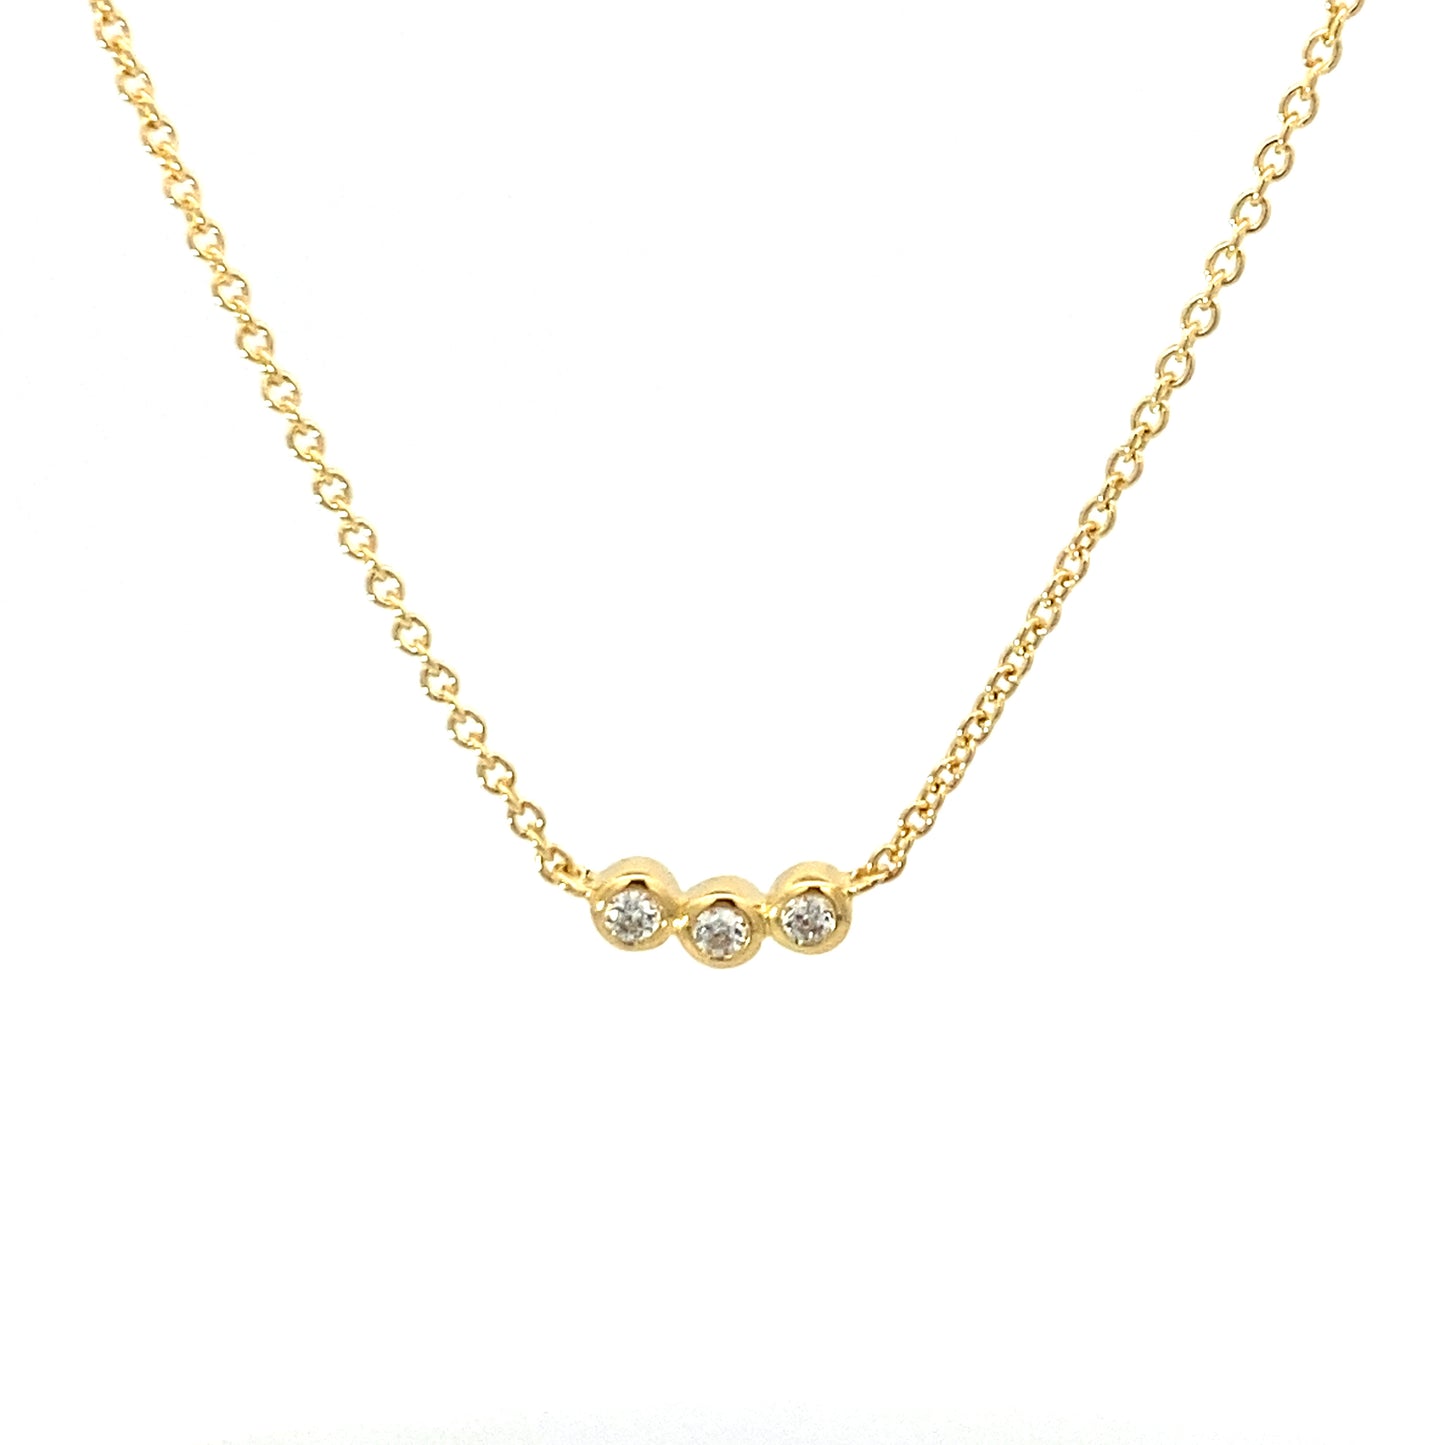 triple stone necklace - cz